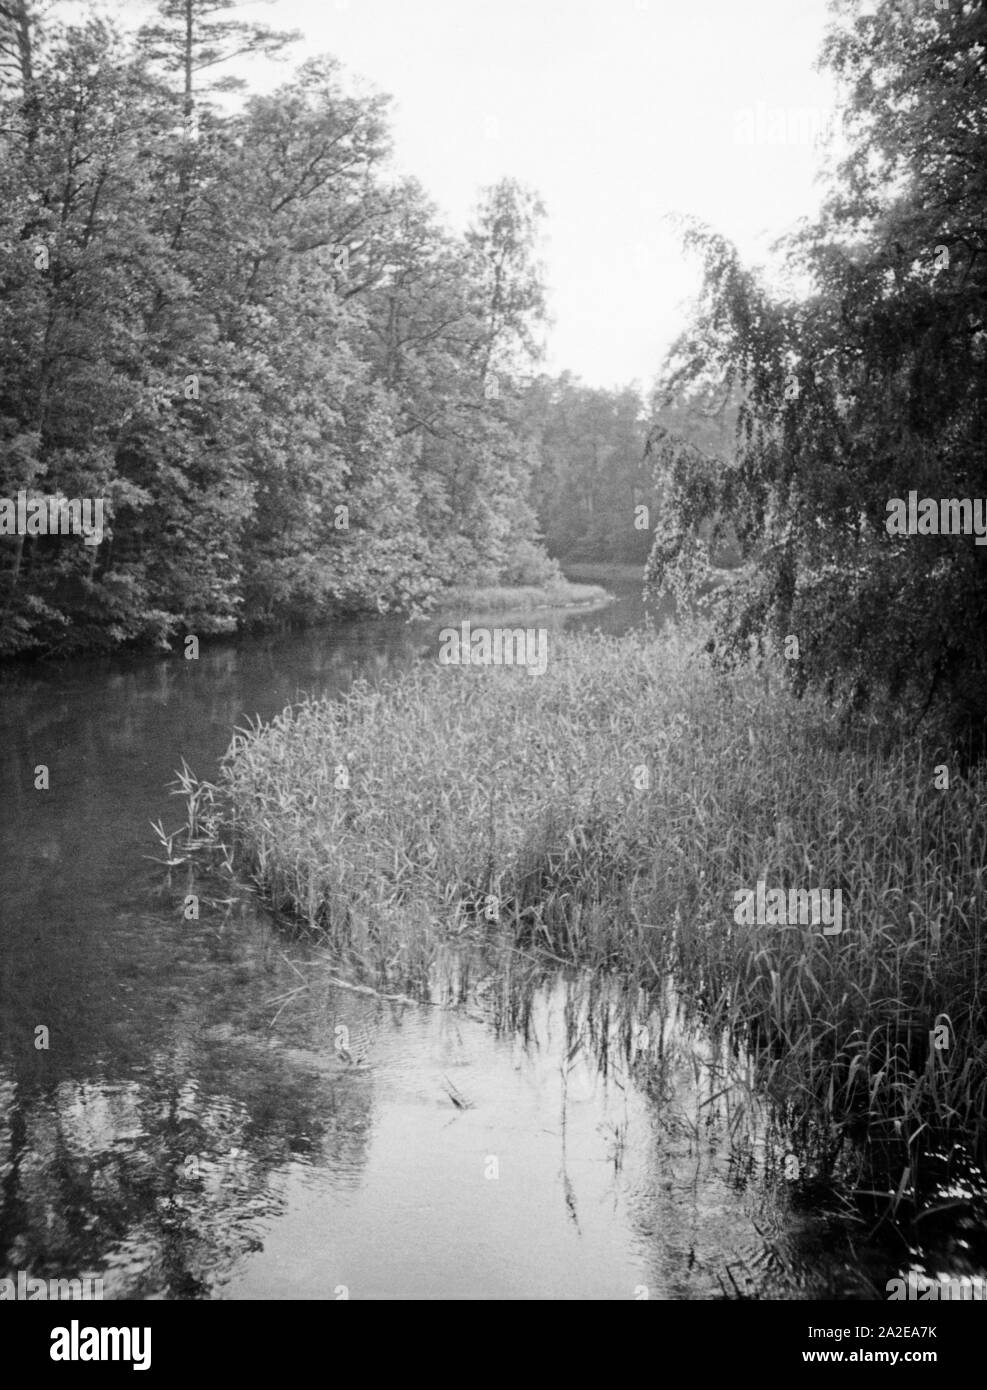 Der Fluß Krutinna fließt aus dem Krutinner See in Masuren, Ostpreußen, 1930er Jahre. River Krutinna leaving Krutinner See lake in Masuria, East Prussia, 1930s. Stock Photo